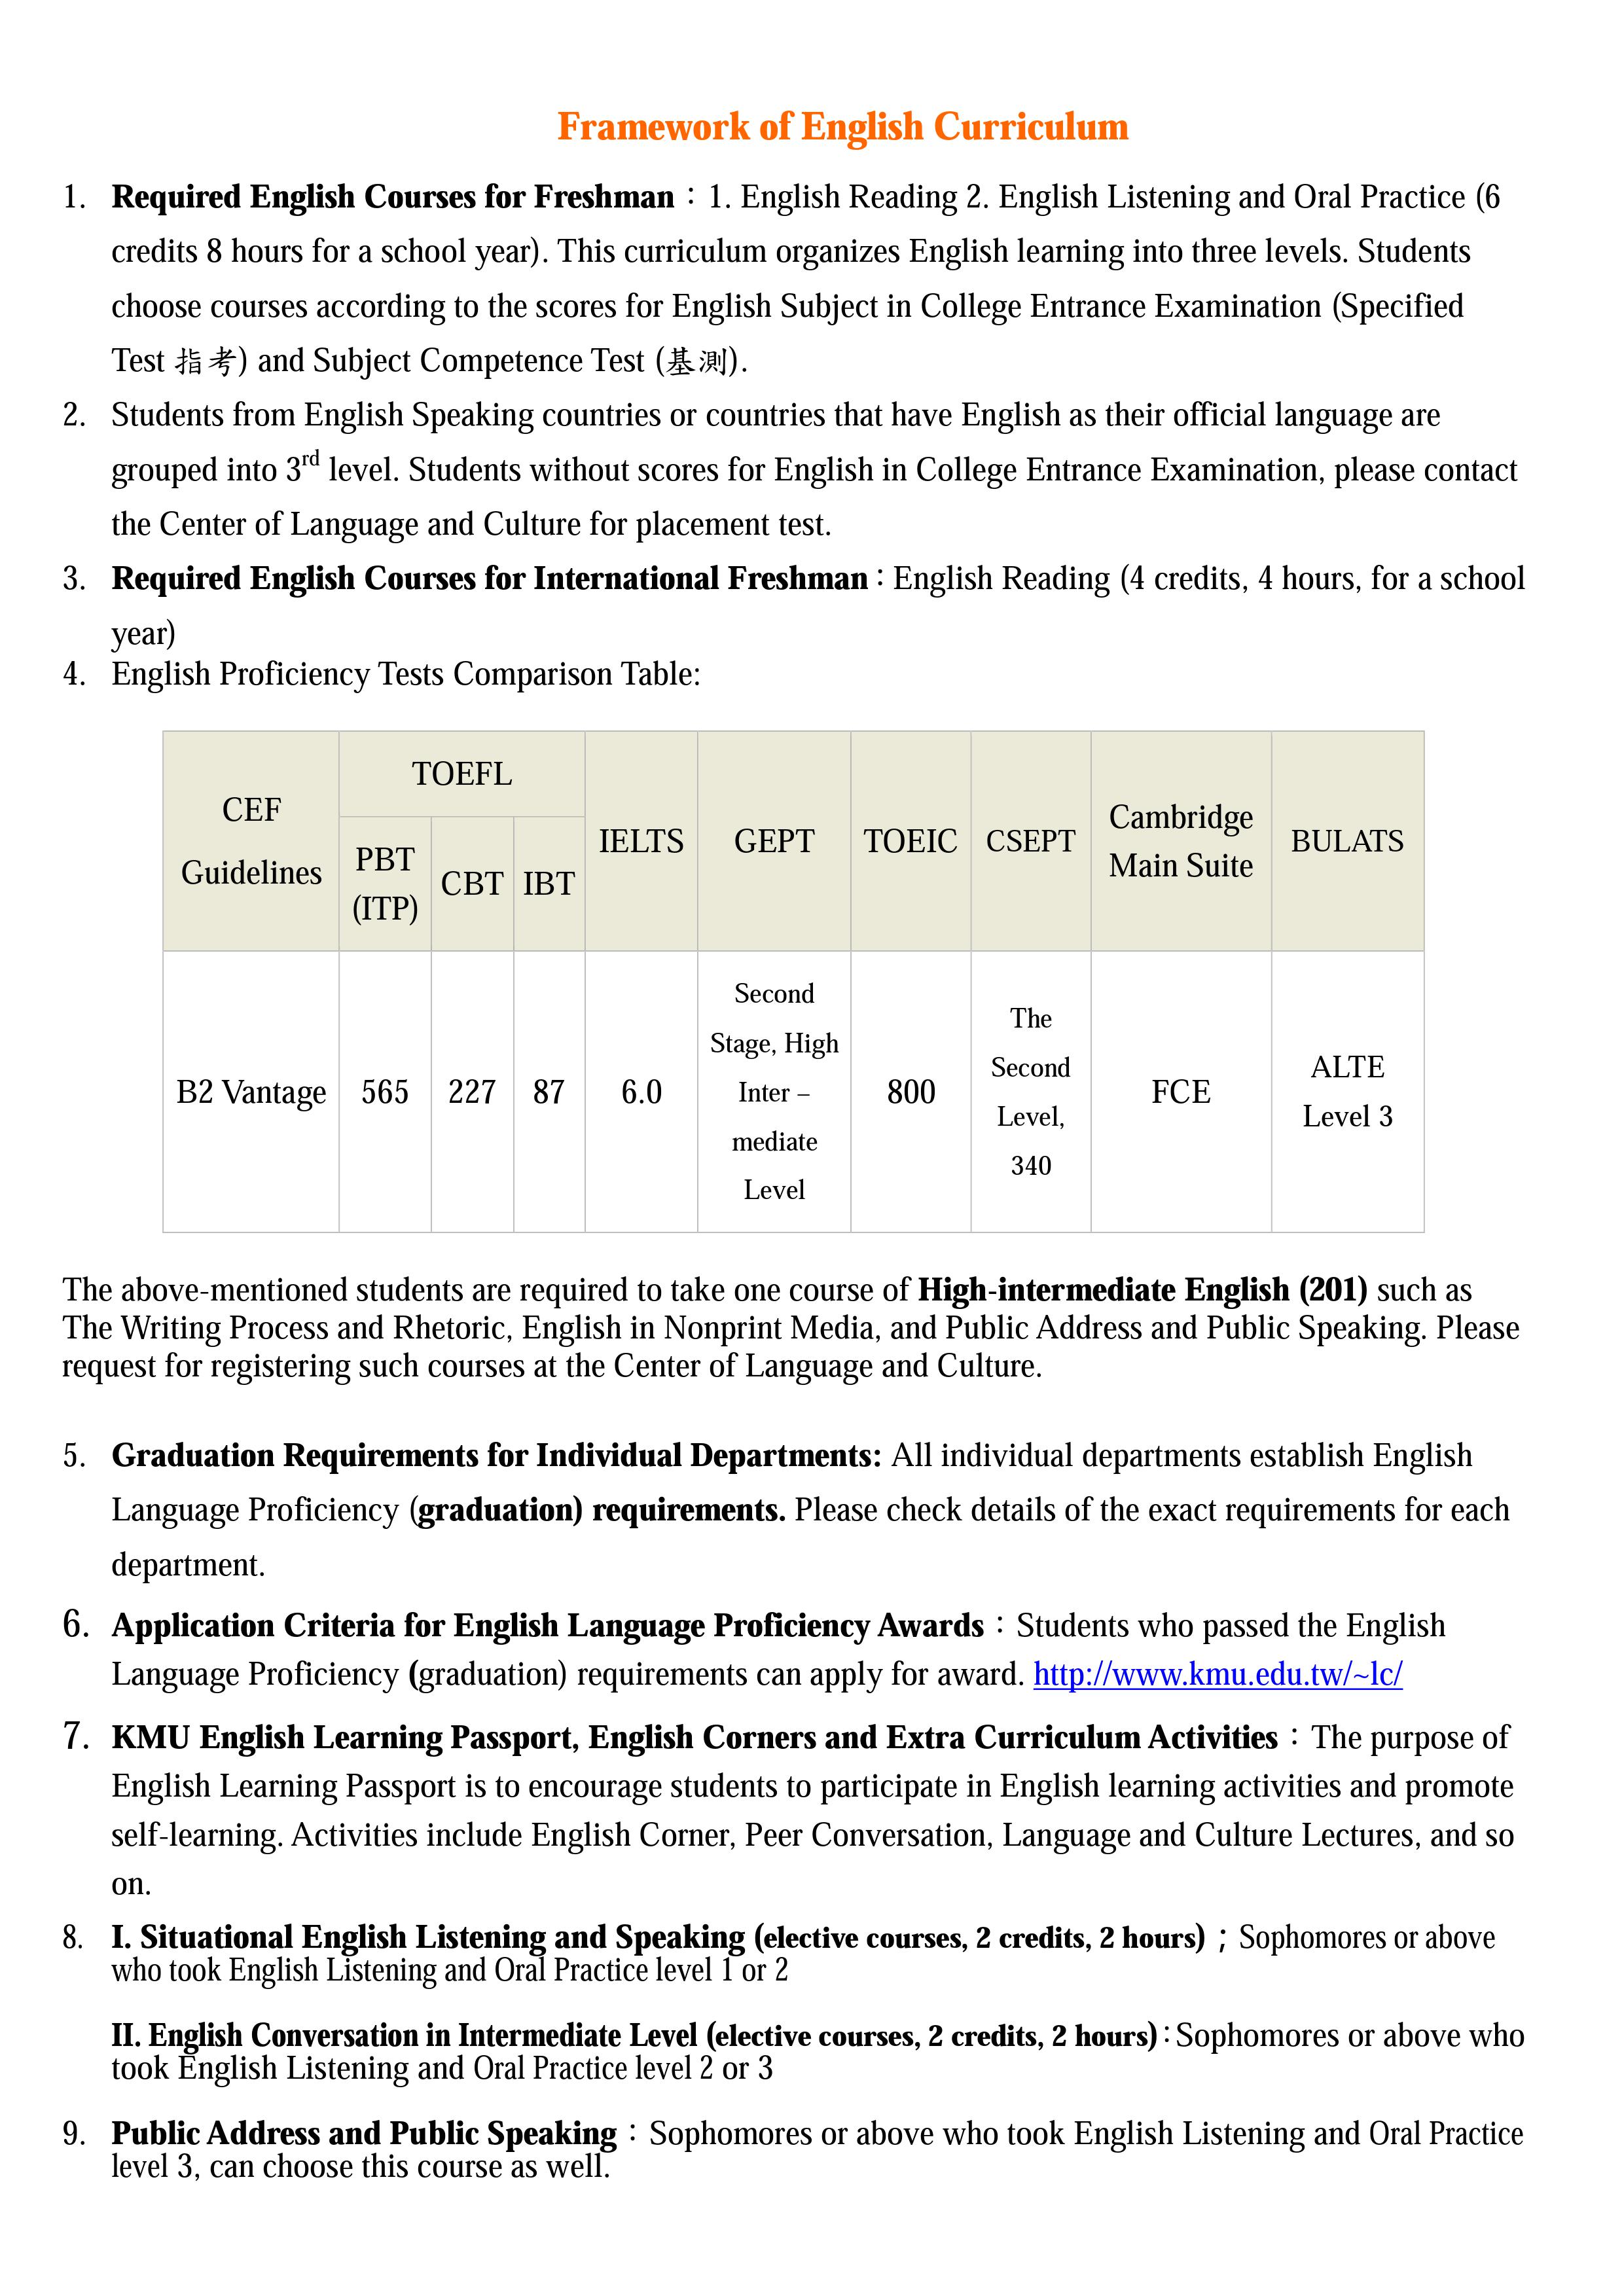 KMU English Proficiency Requirement and English Programs for 105 Freshmen 3